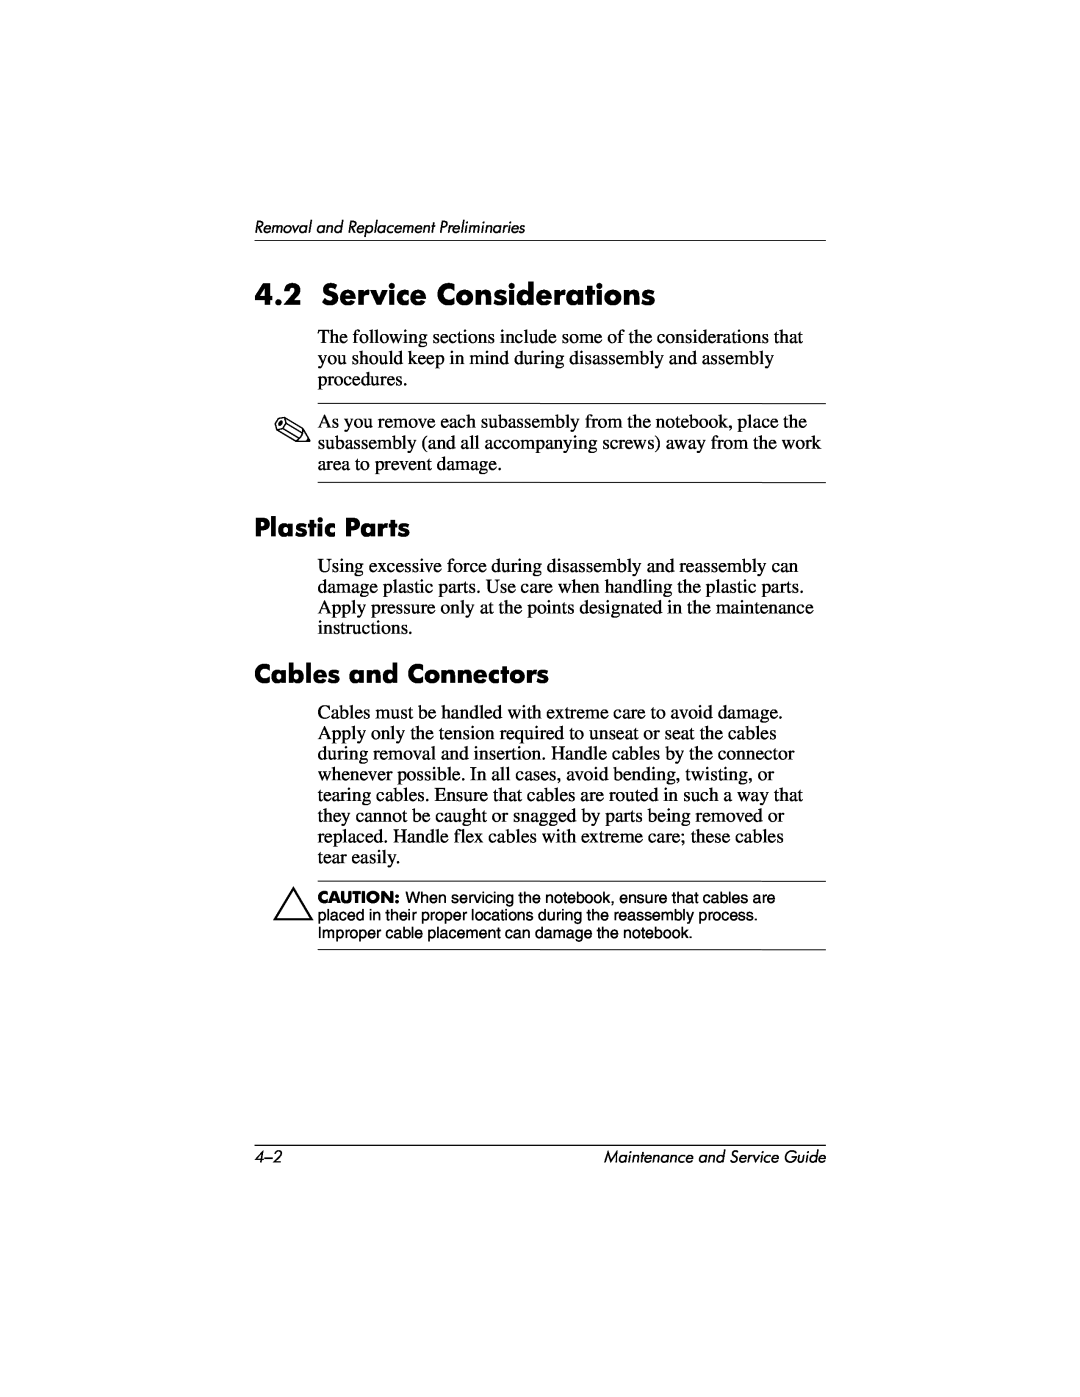 HP nx7000, X1000 manual Service Considerations, Plastic Parts, Cables and Connectors 